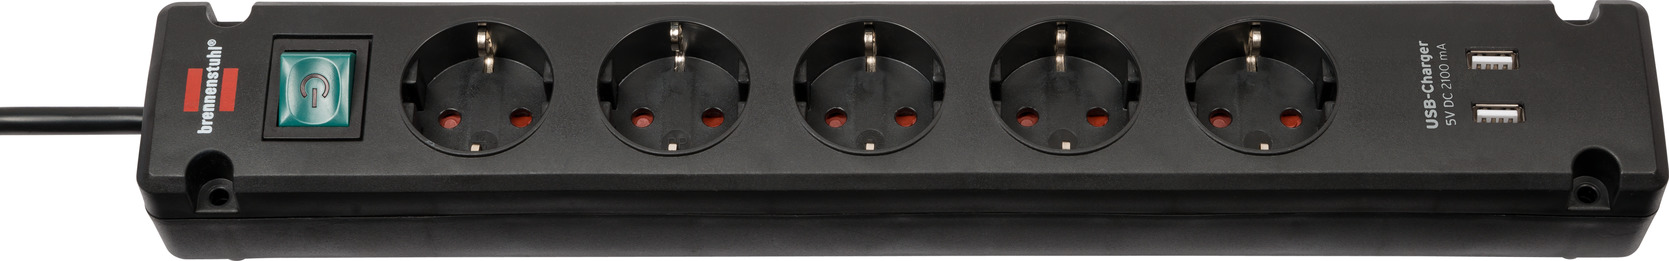 Brennenstuhl 1150660315 Bremounta stekkerdoos met USB - 5-voudig - 3m - H05VV-F 3G1,5 - zwart